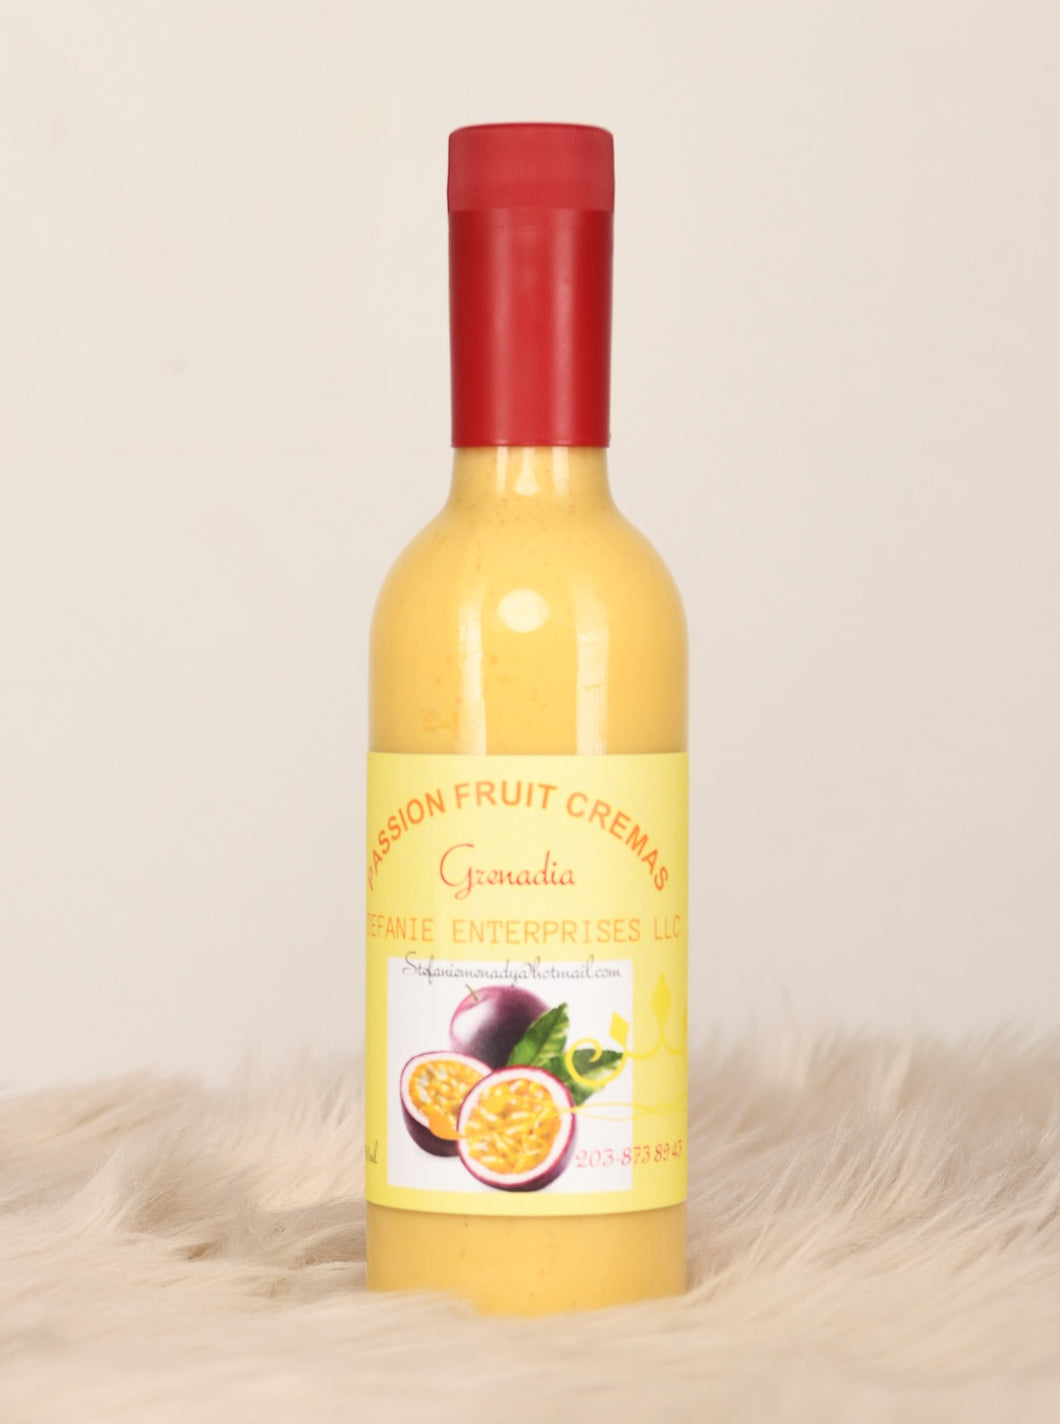 Half bottle of passion fruit Cremas-Grenadia